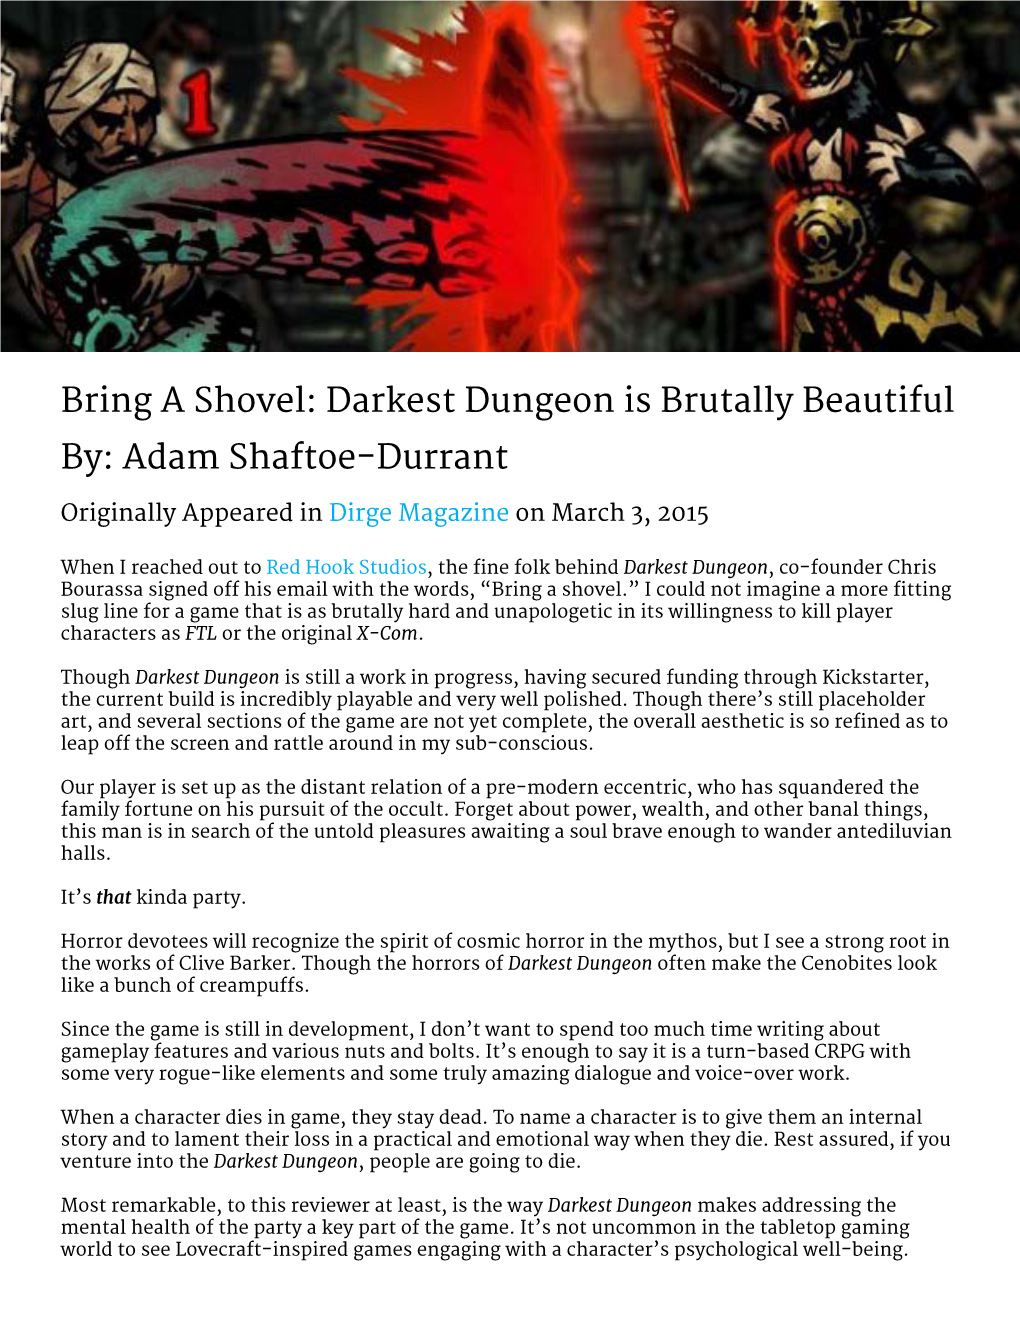 Bring a Shovel: Darkest Dungeon Is Brutally Beautiful By: Adam Shaftoe-Durrant